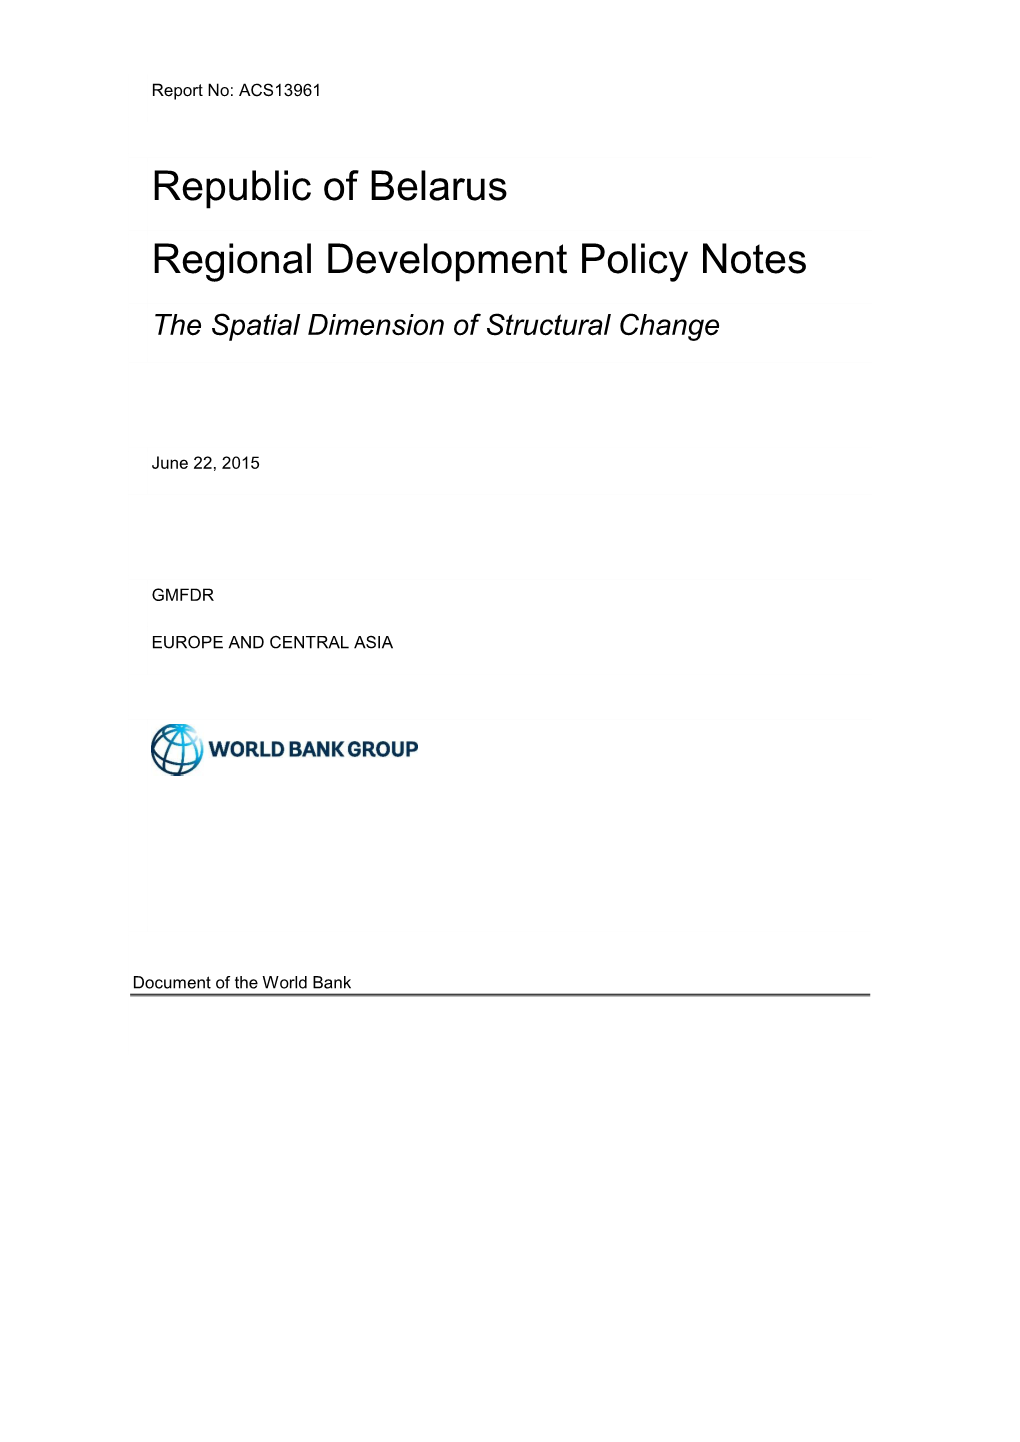 Republic of Belarus Regional Development Policy Notes